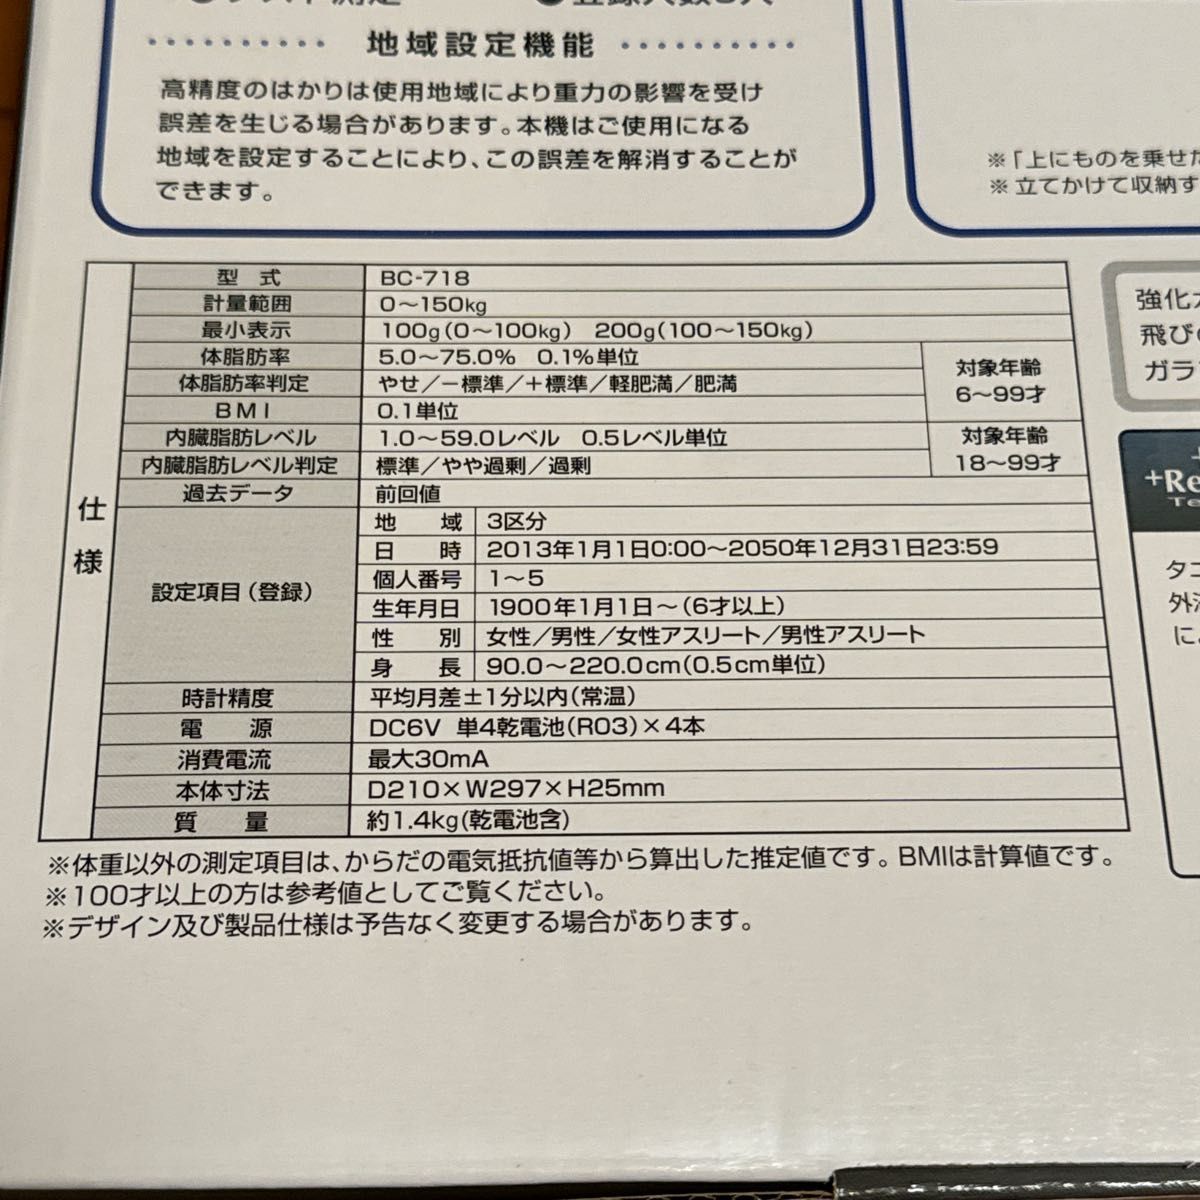 TANITA タニタ InnerScan BC-718-WH 新品未開封